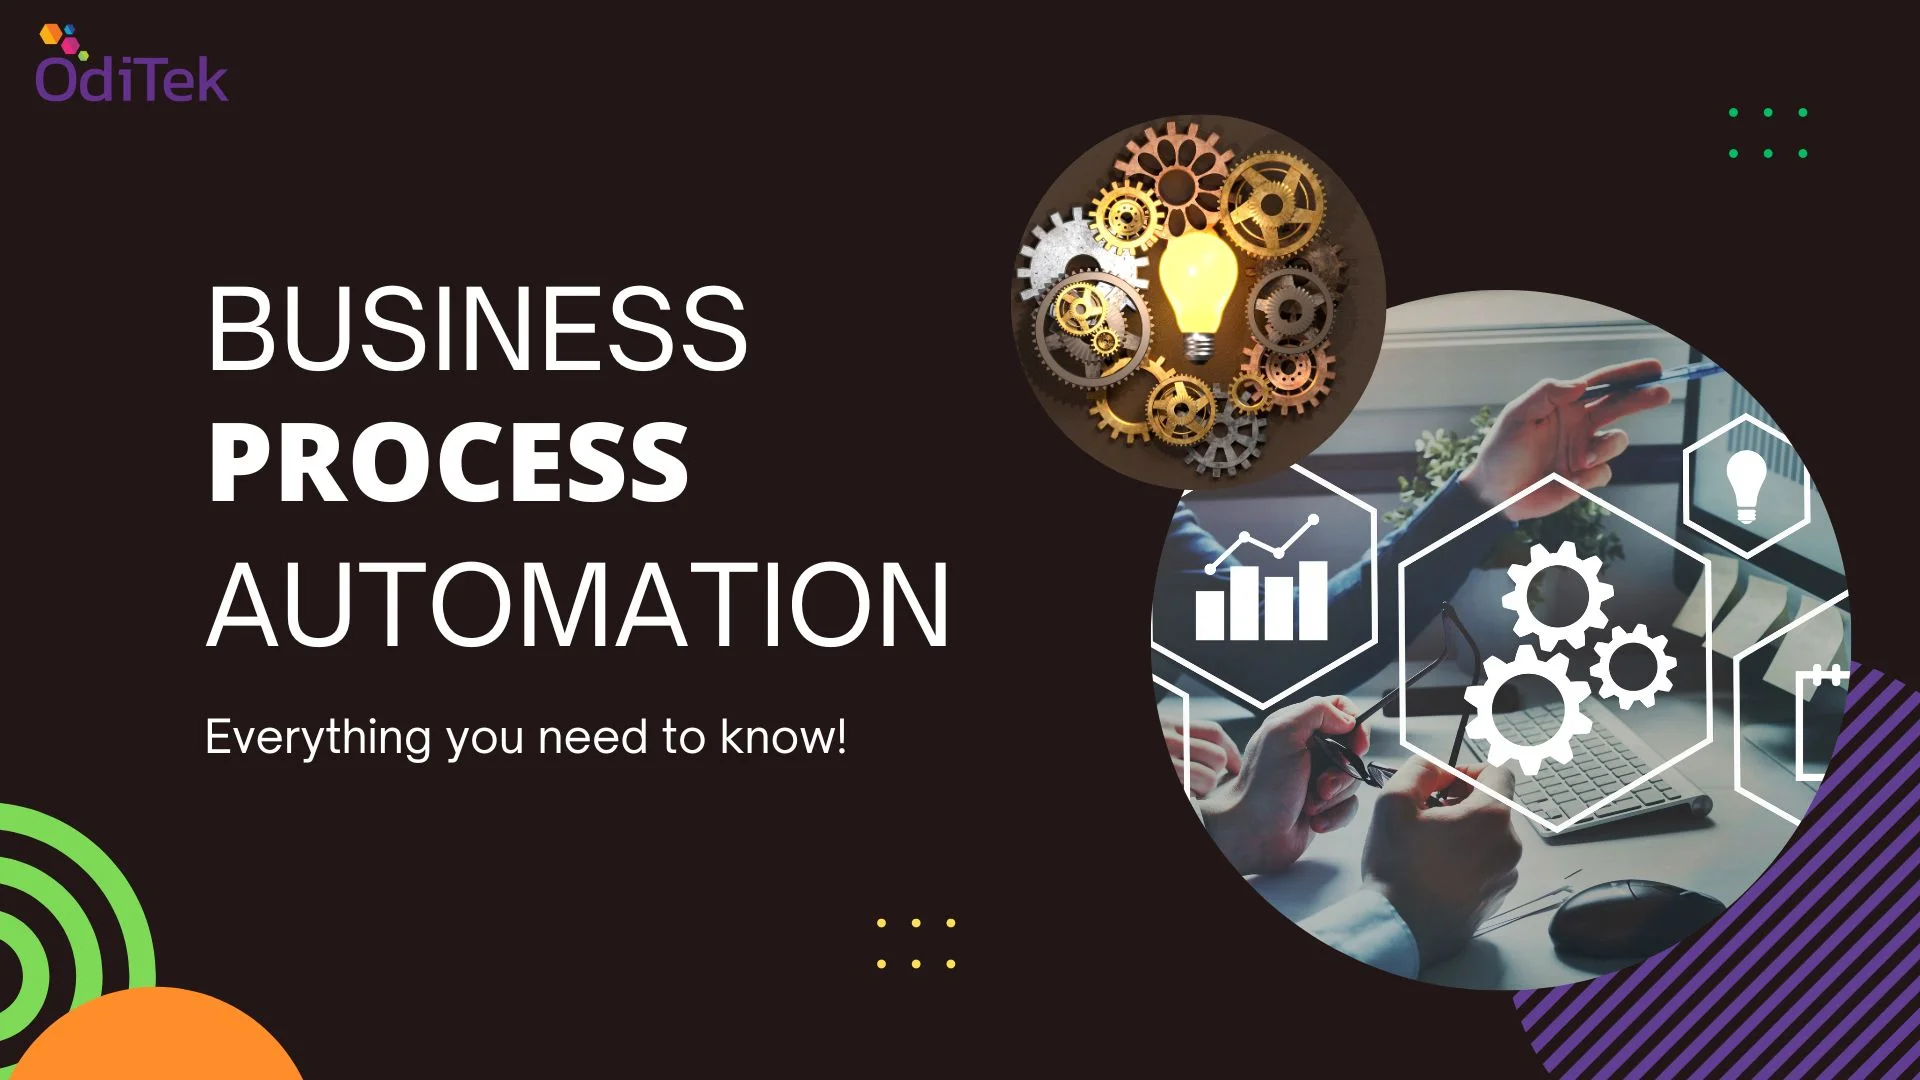 Business Process Automation benefits